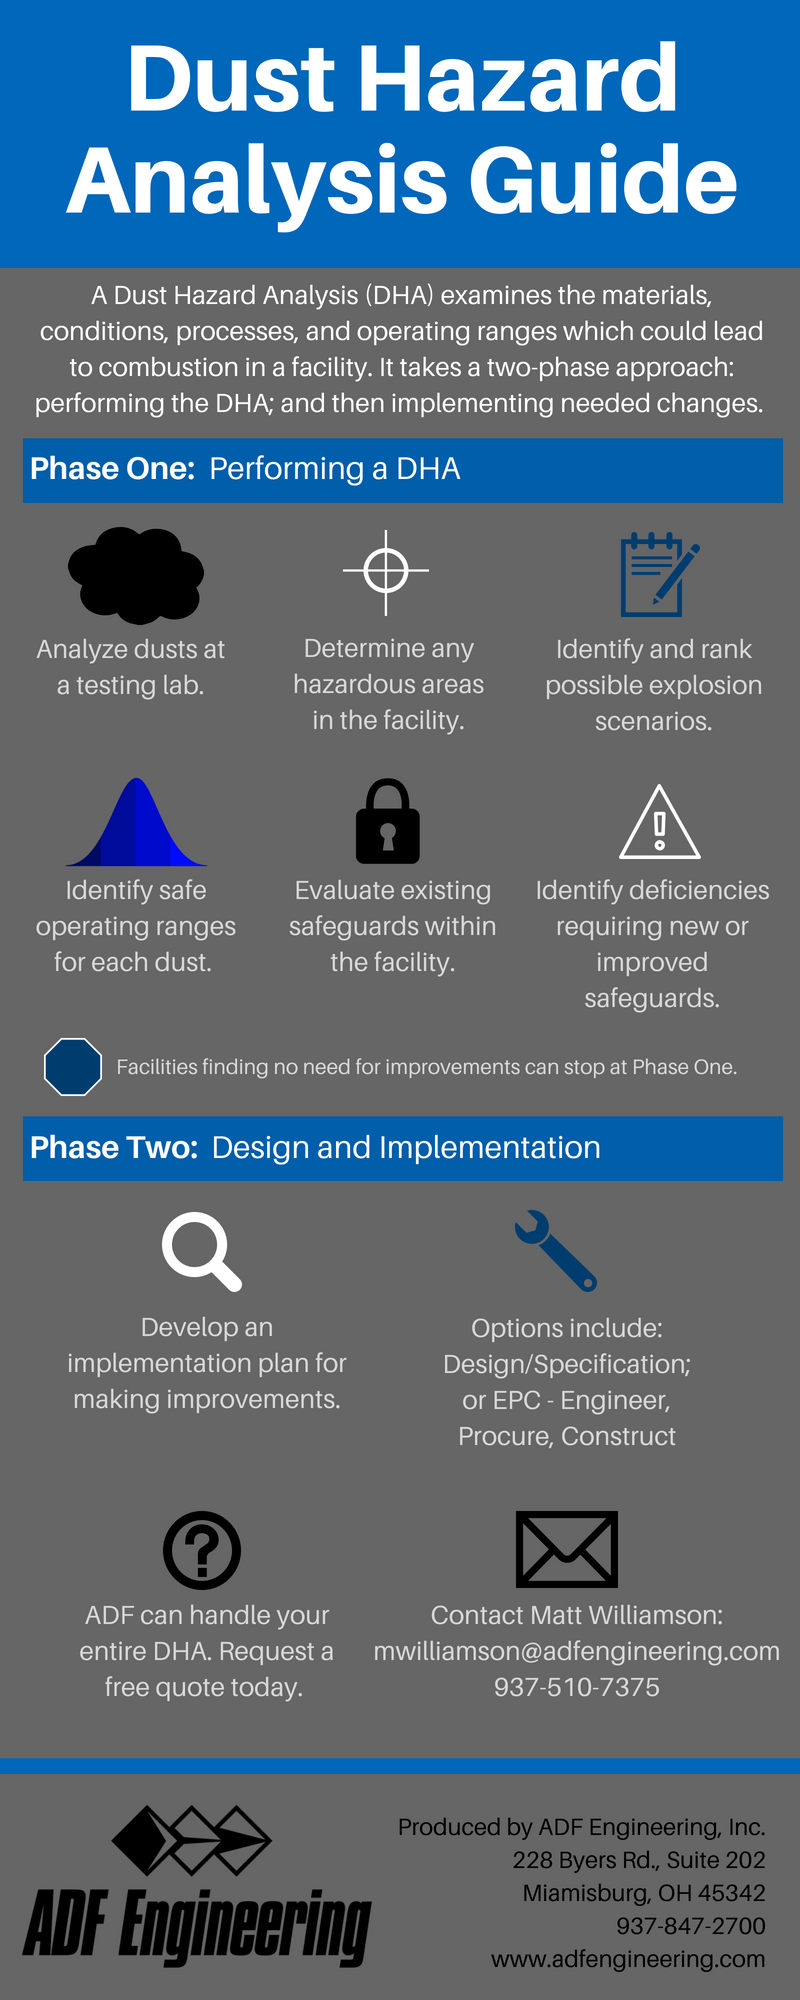 Dust Hazard Analysis ADF Engineering